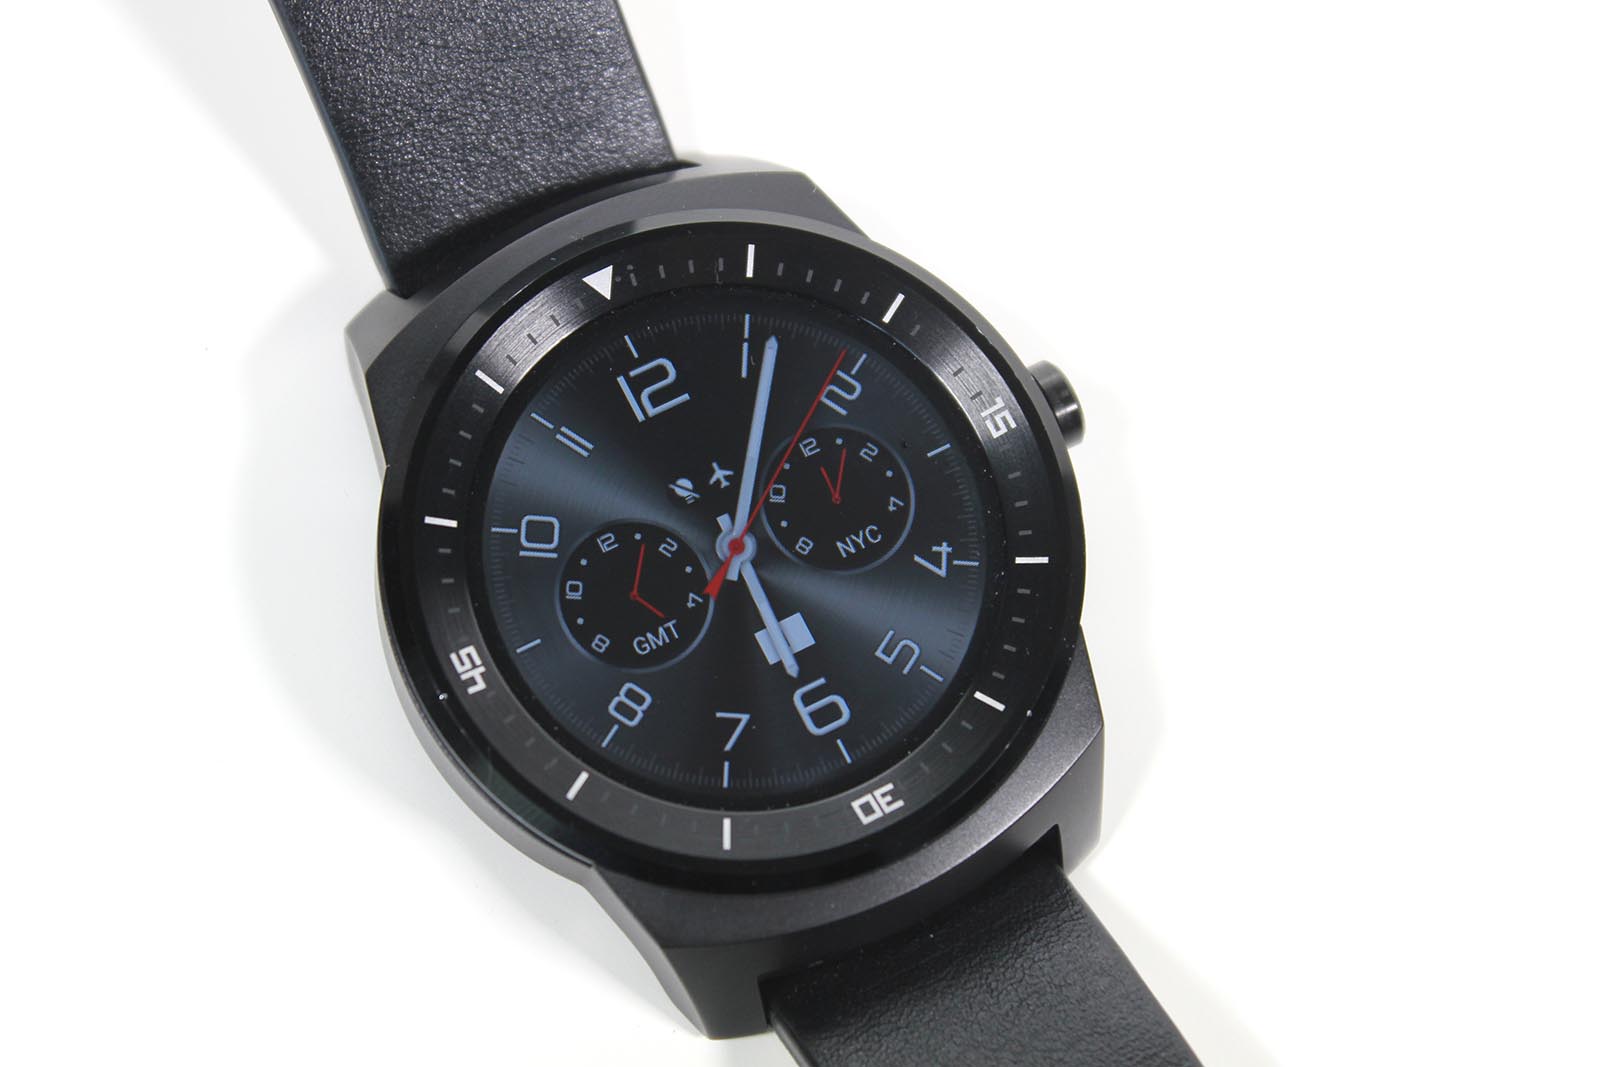 LG G Watch R - Display